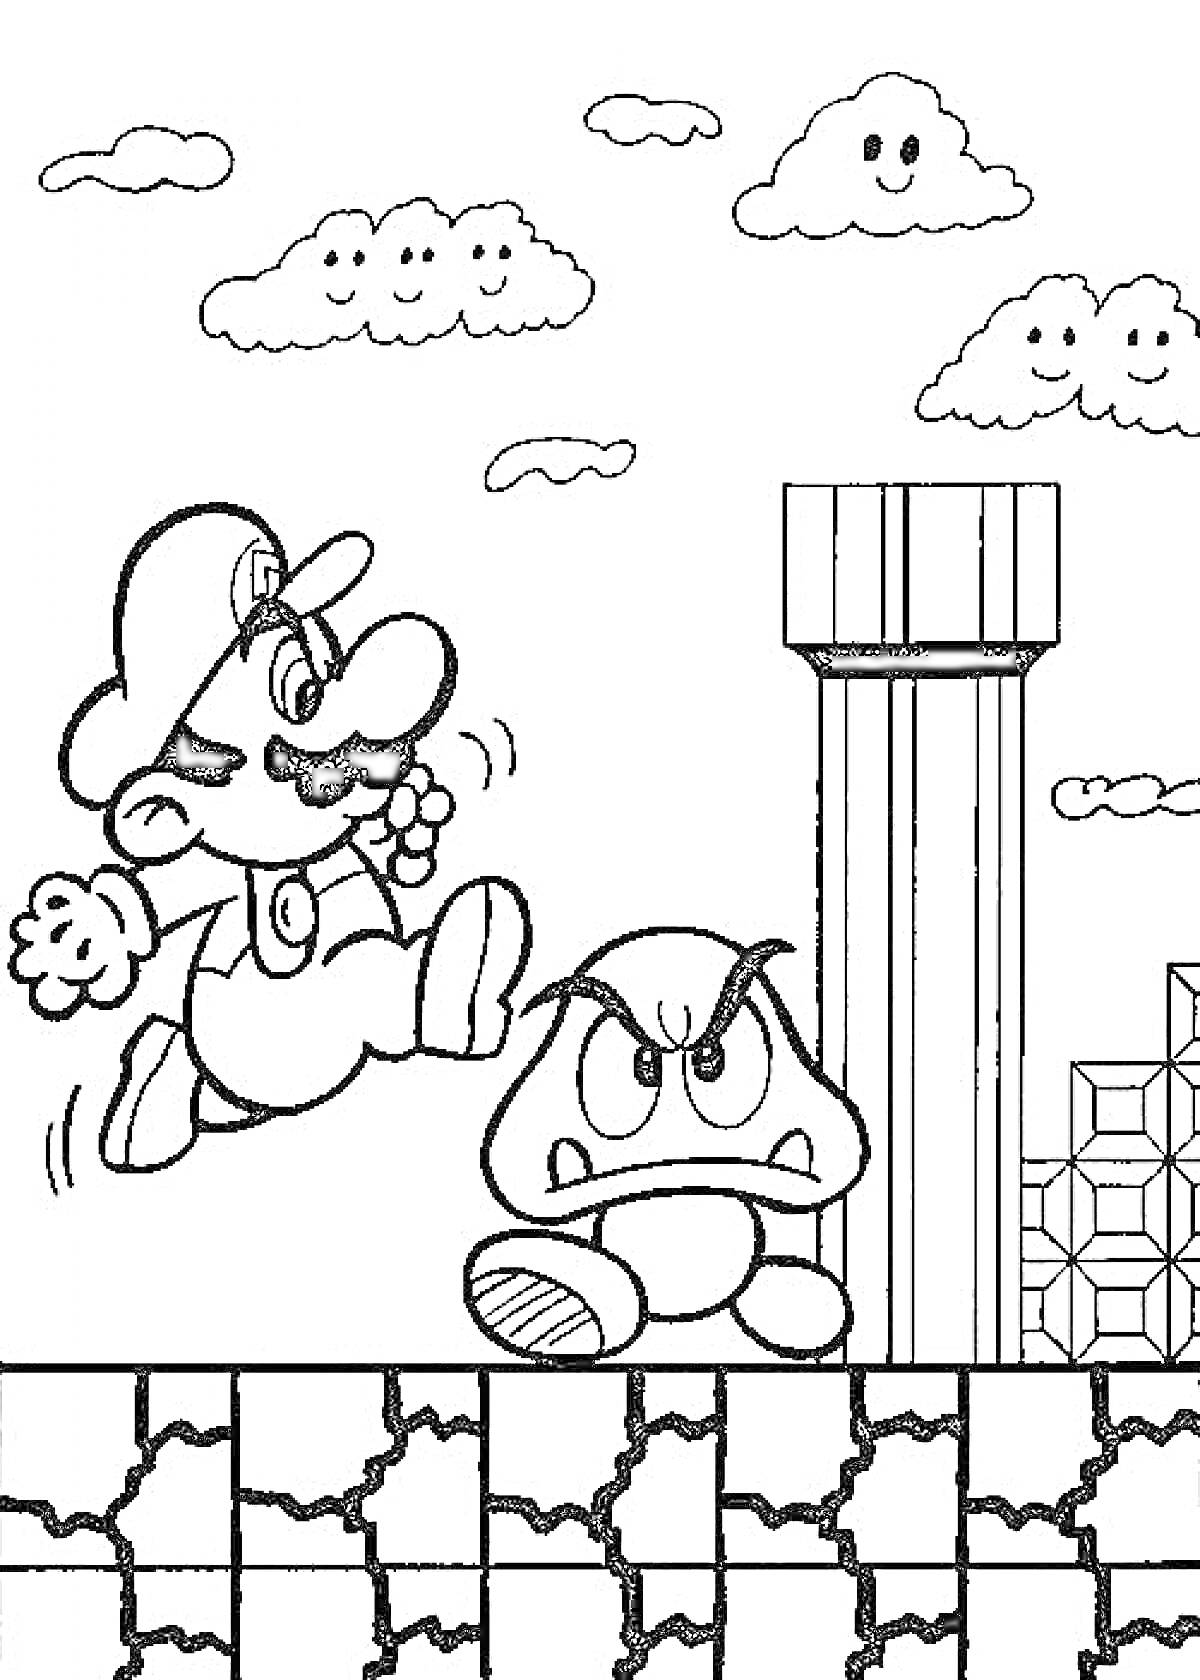 Раскраска Марио прыгает через Гумба и блоки на платформе с облаками на заднем плане